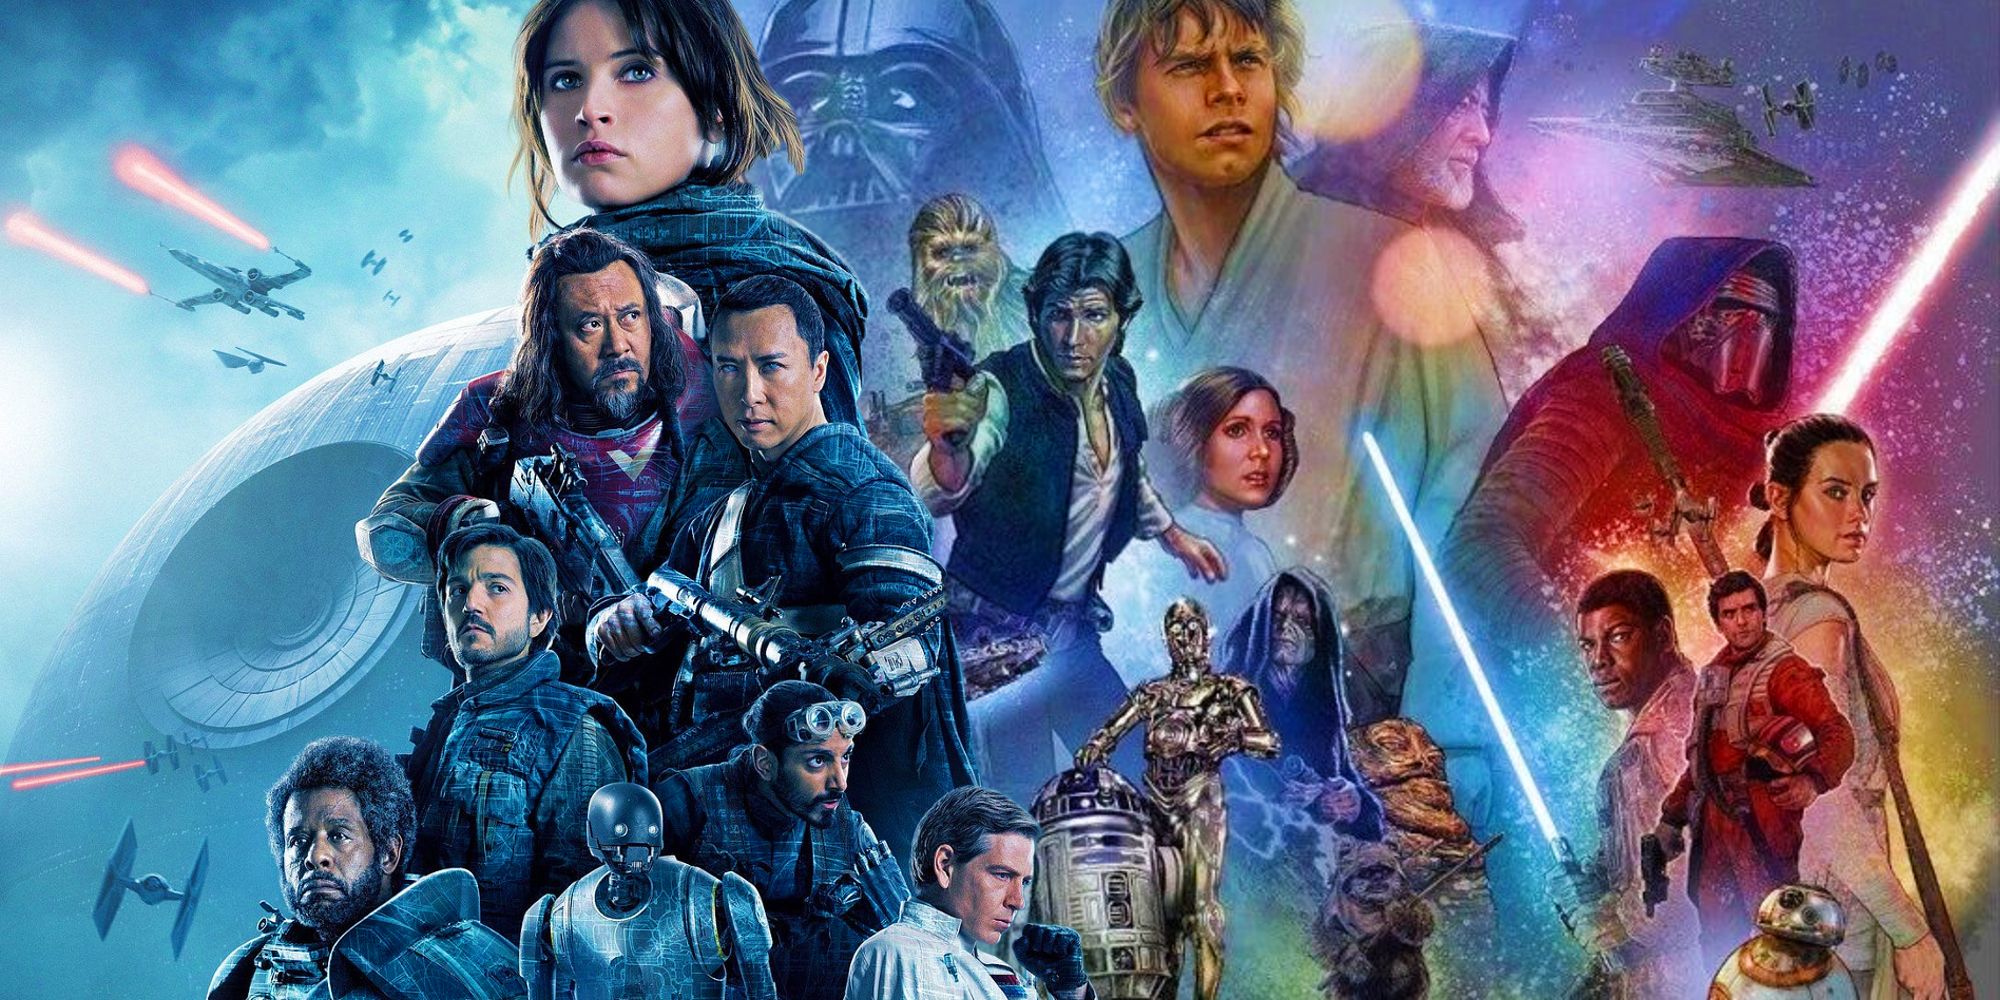 10 Tramas de Star Wars que eu queria ver no cinema